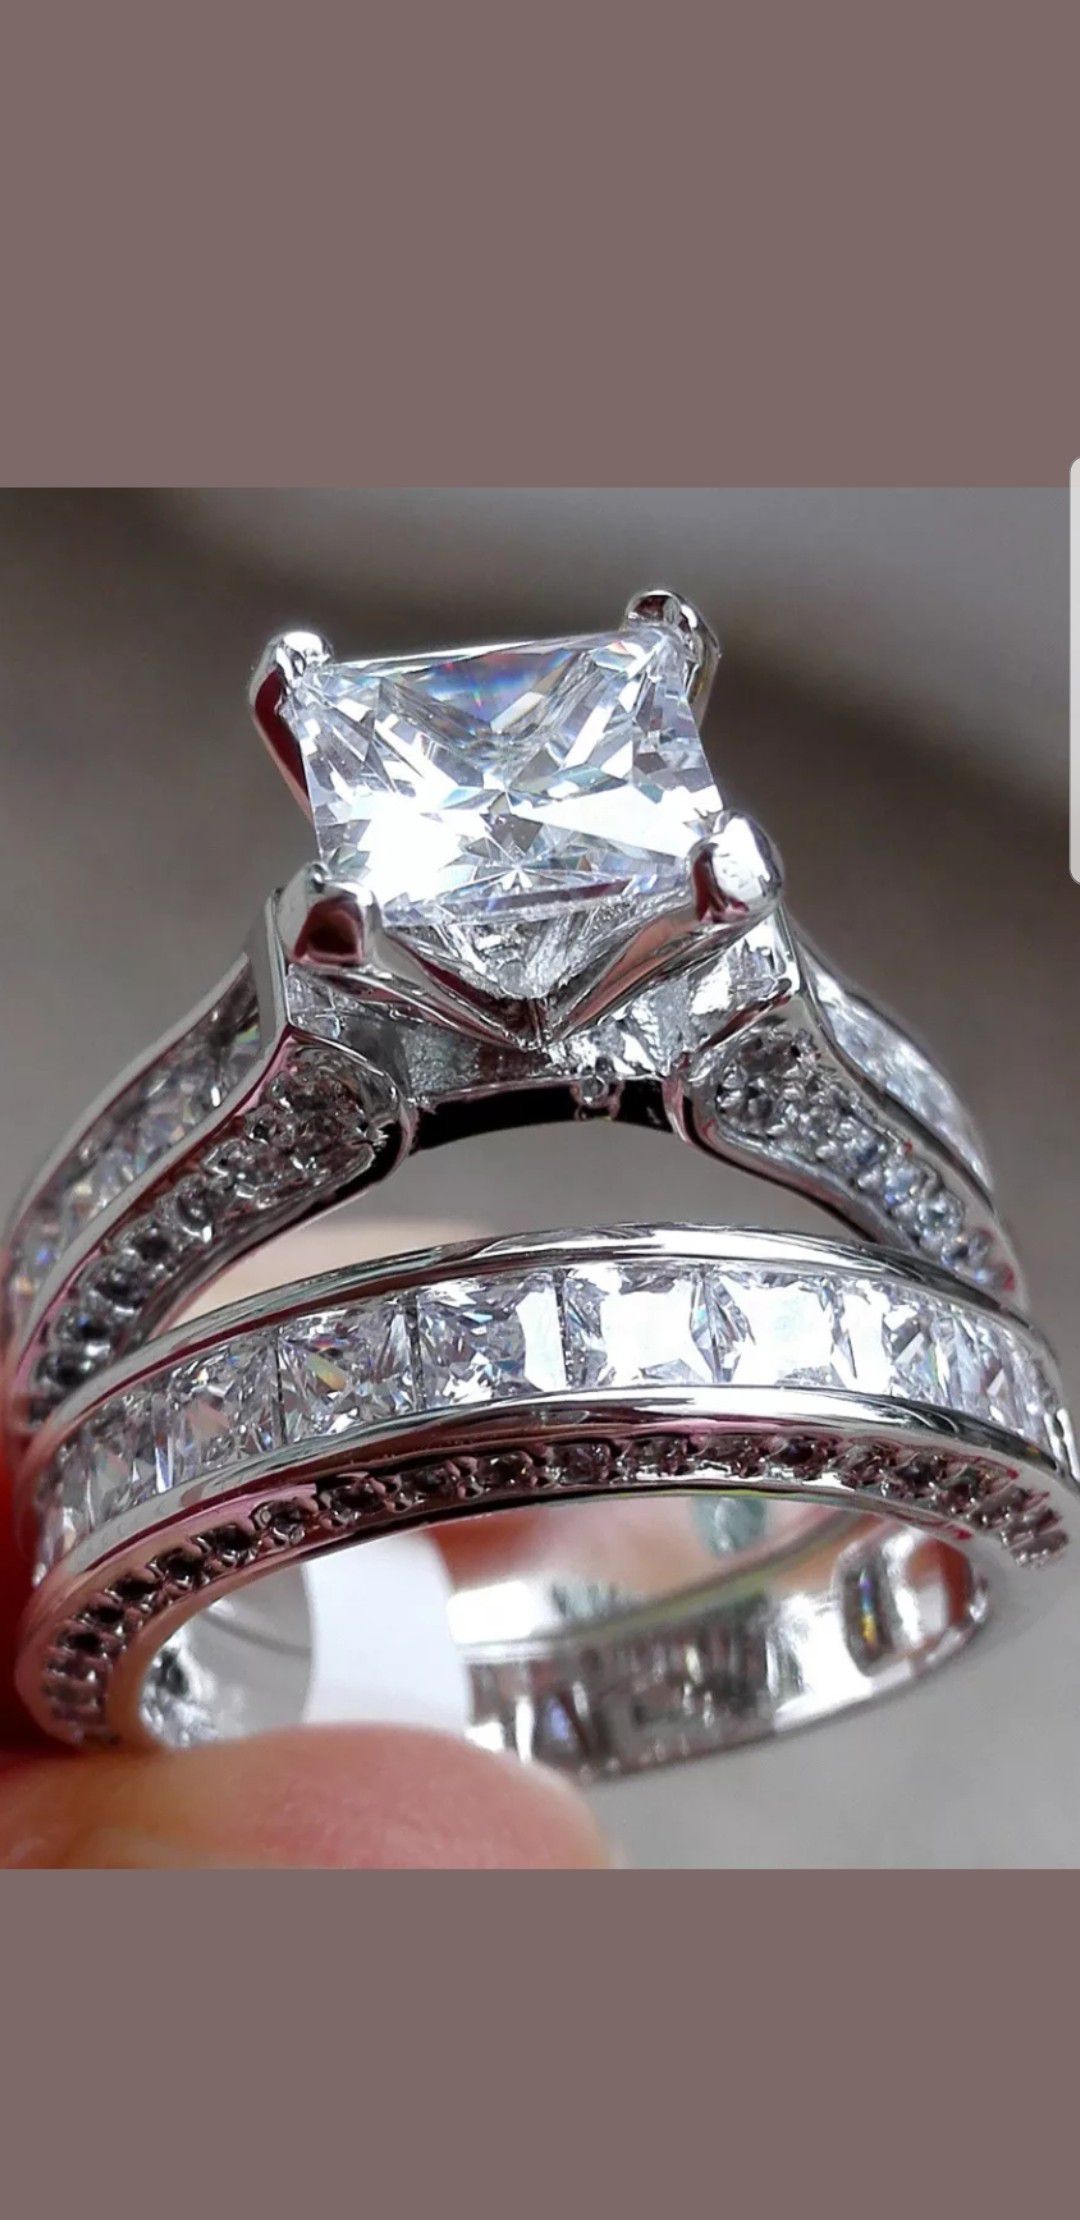 ❤Womens Wedding Engagement Ring Set Princess White Cz 925 Sterling Silver Sz 5-10❤